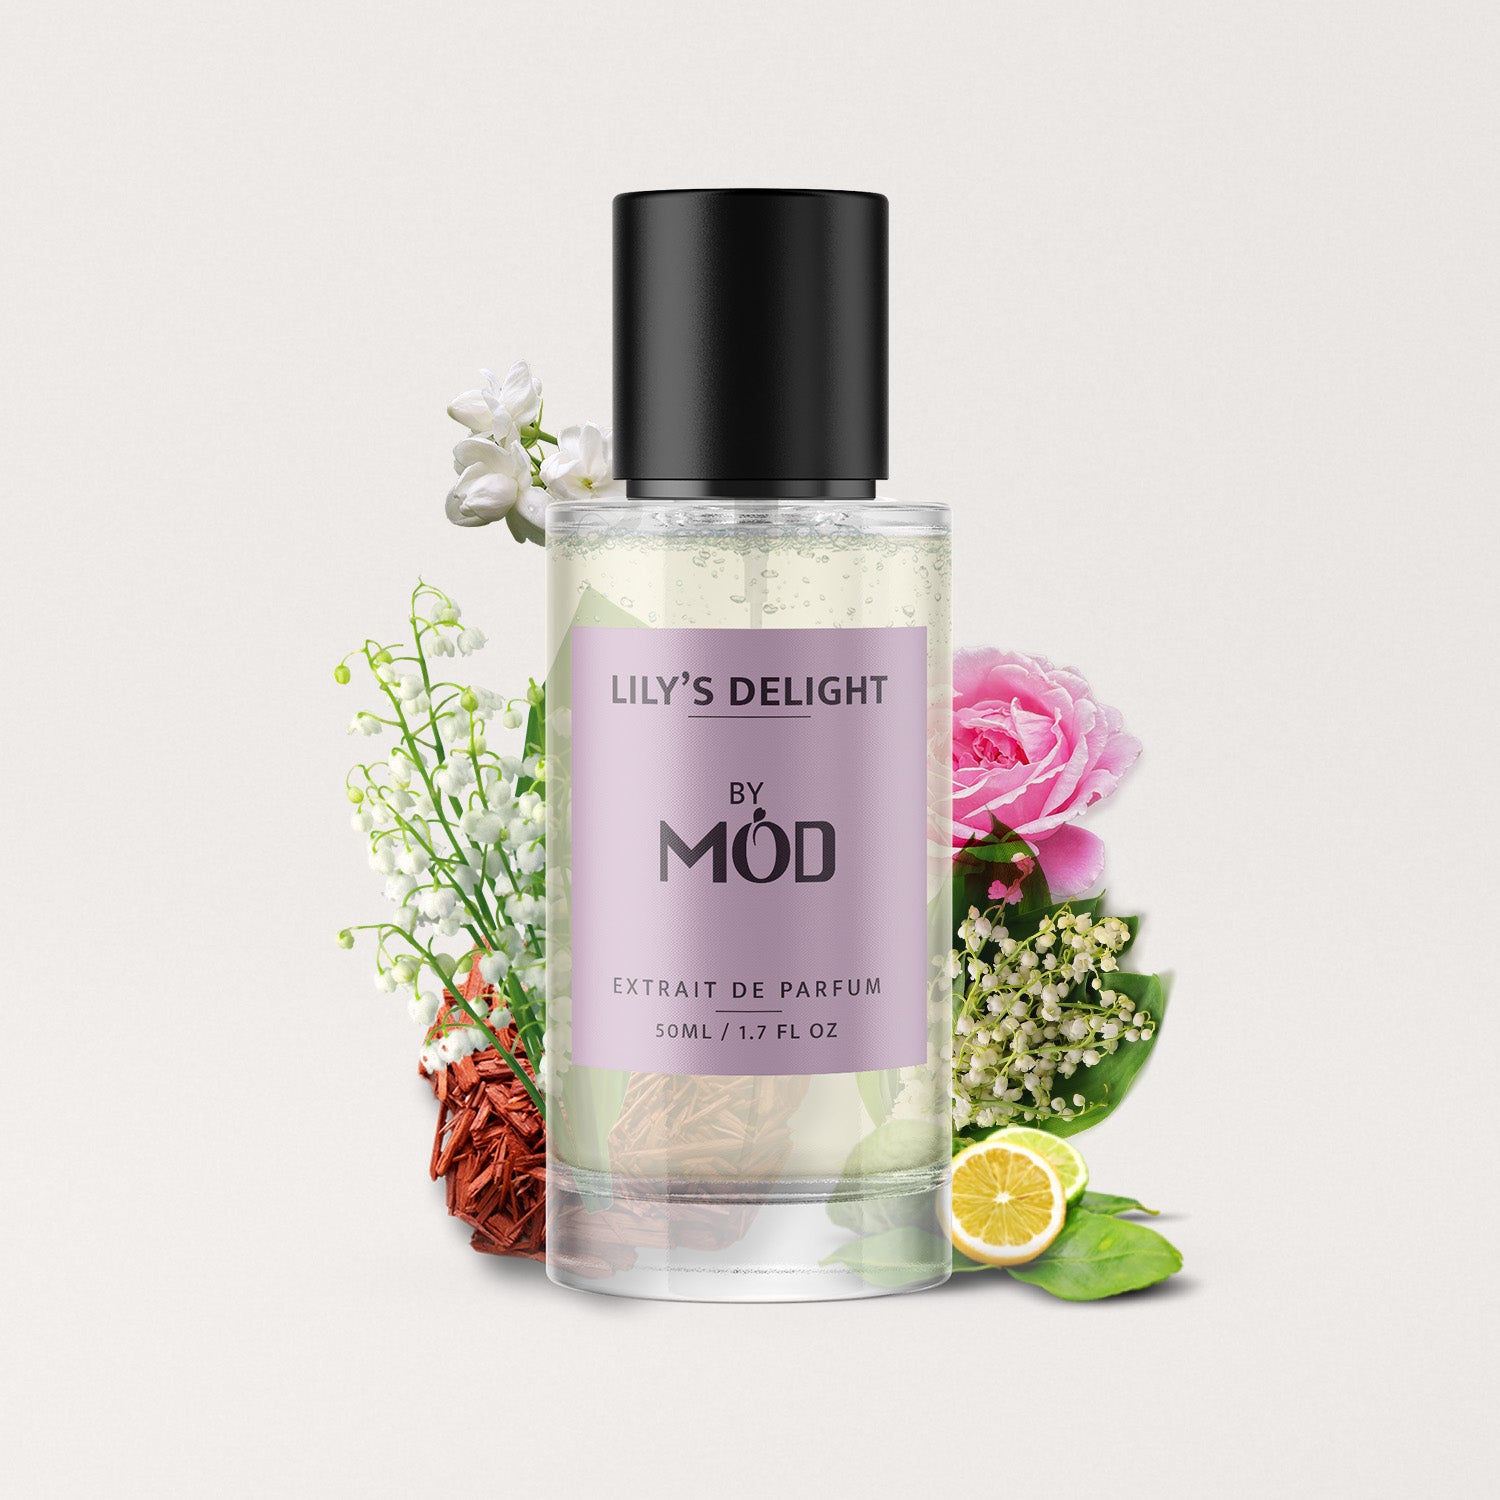 Lily's Delight - Mod Fragrances